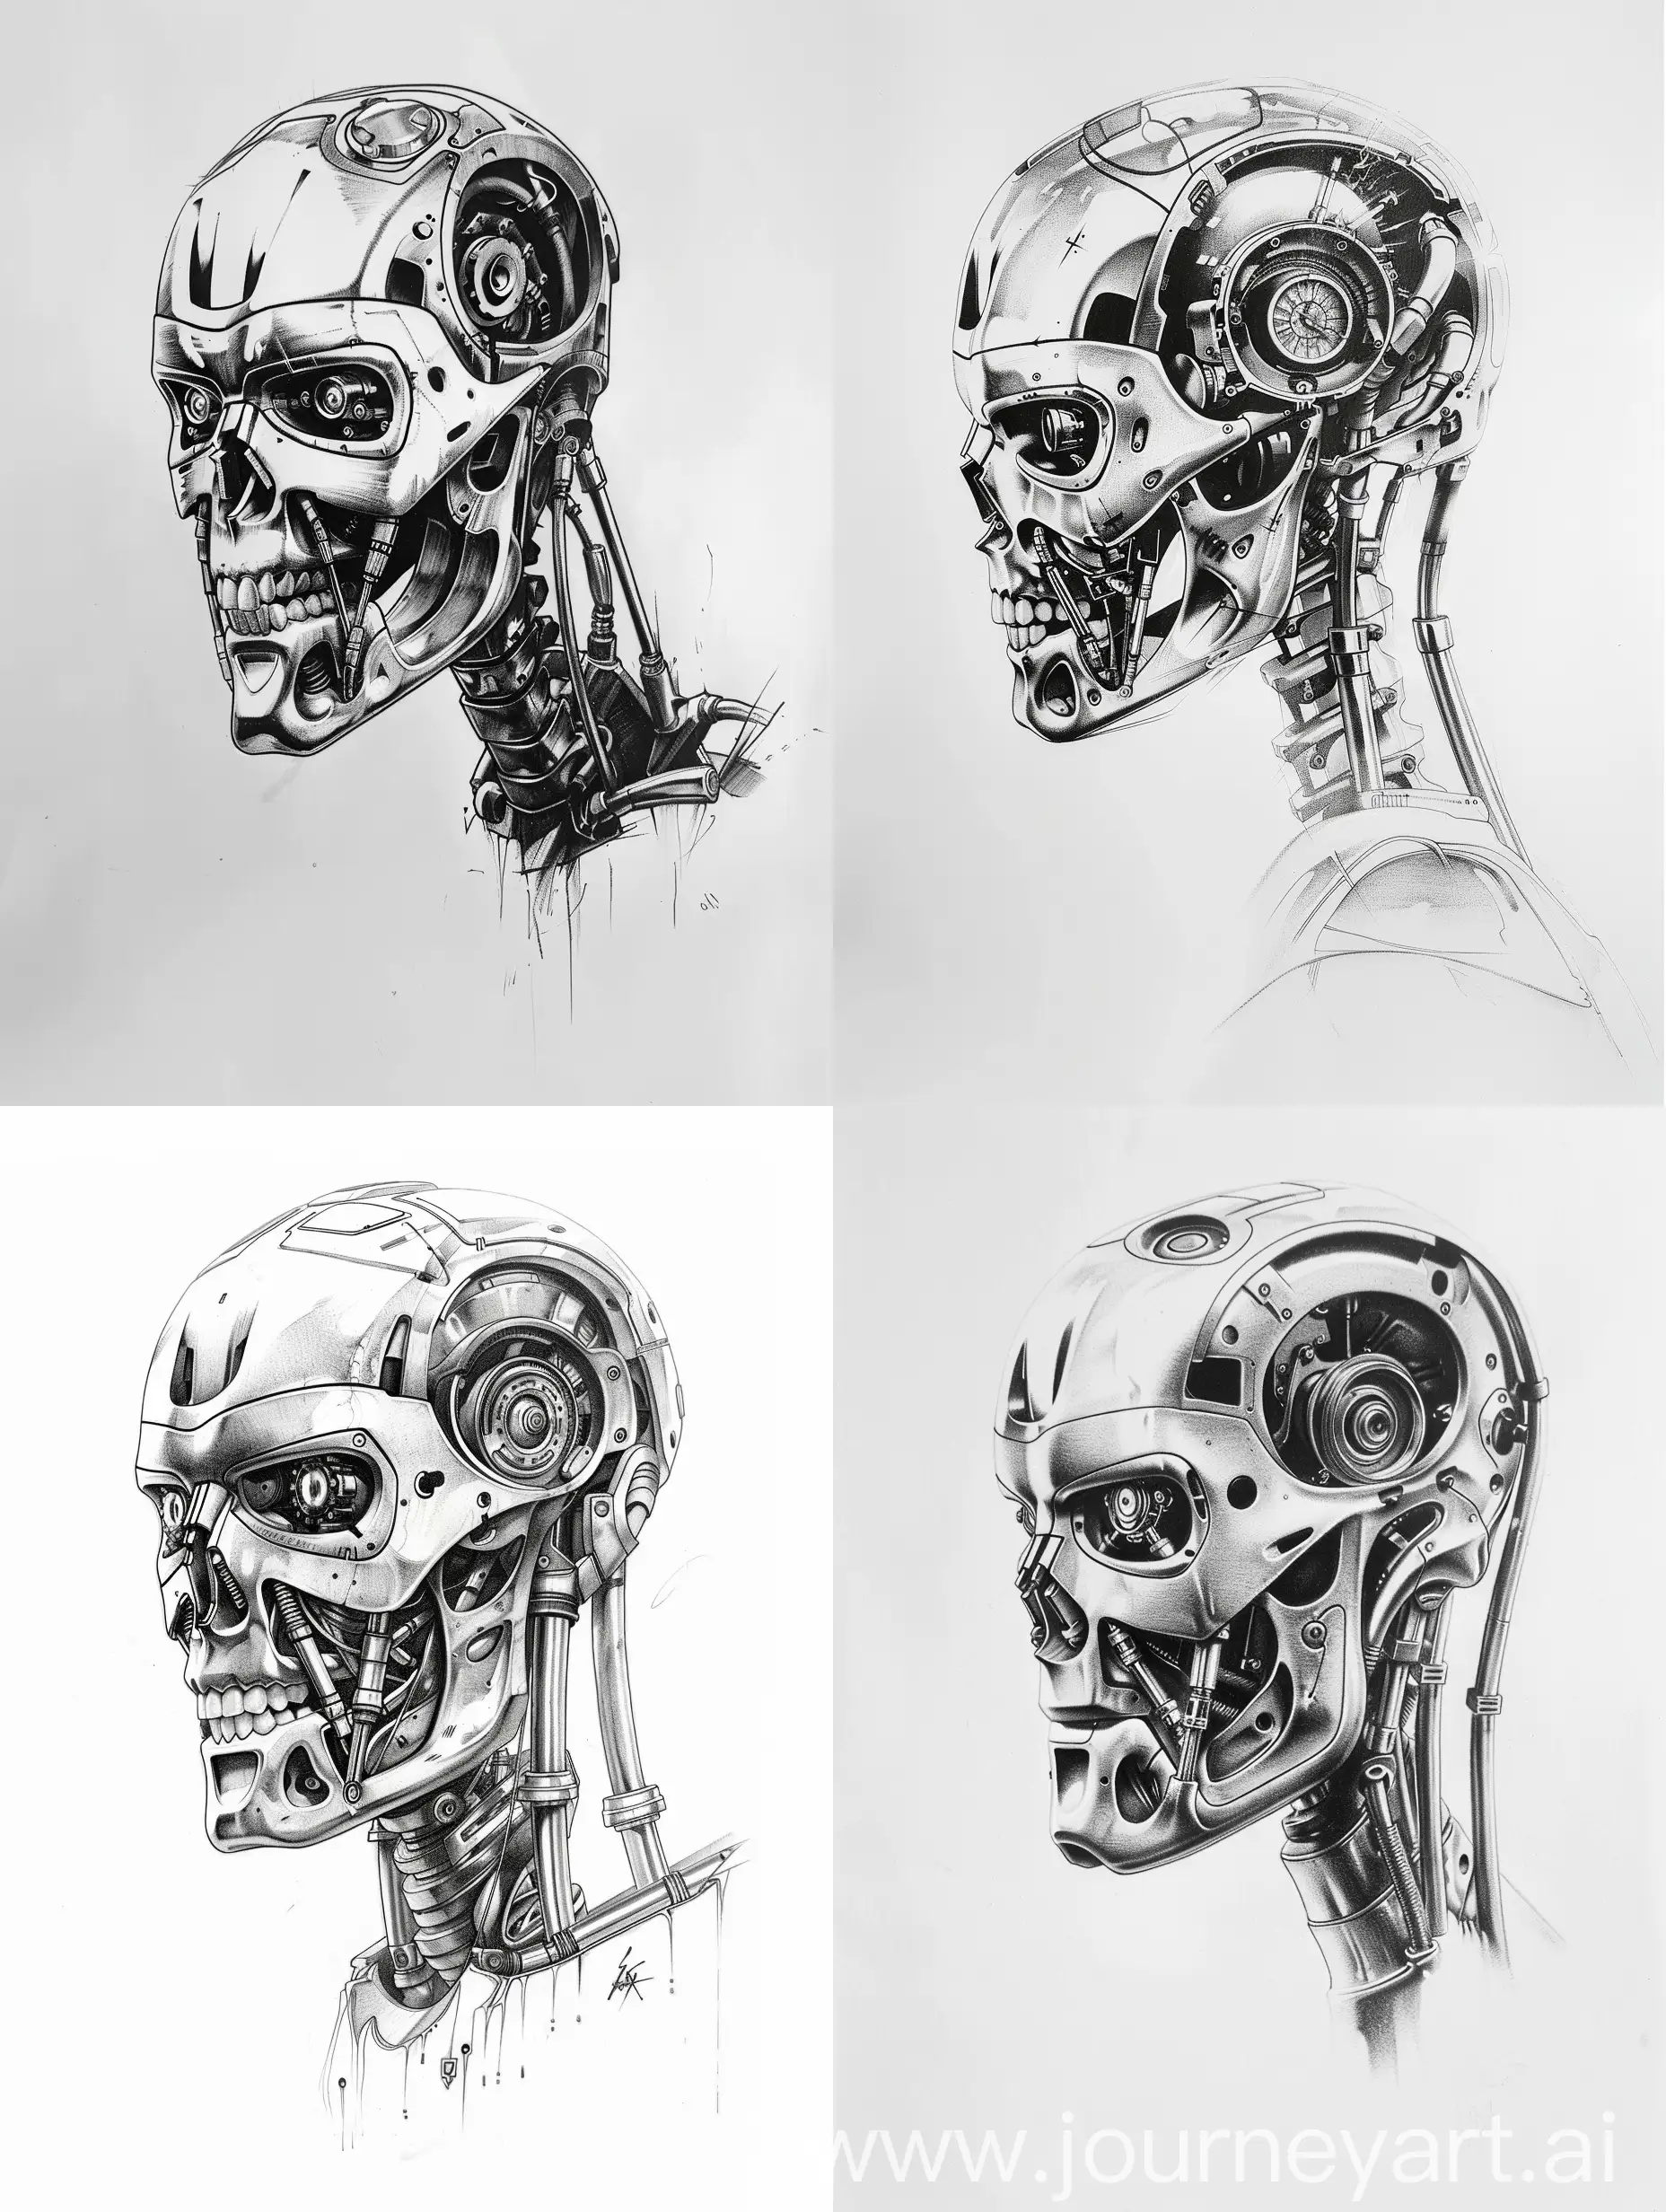 Minimalist-T1000-Terminator-Movie-Tattoo-Sketch-on-White-Background